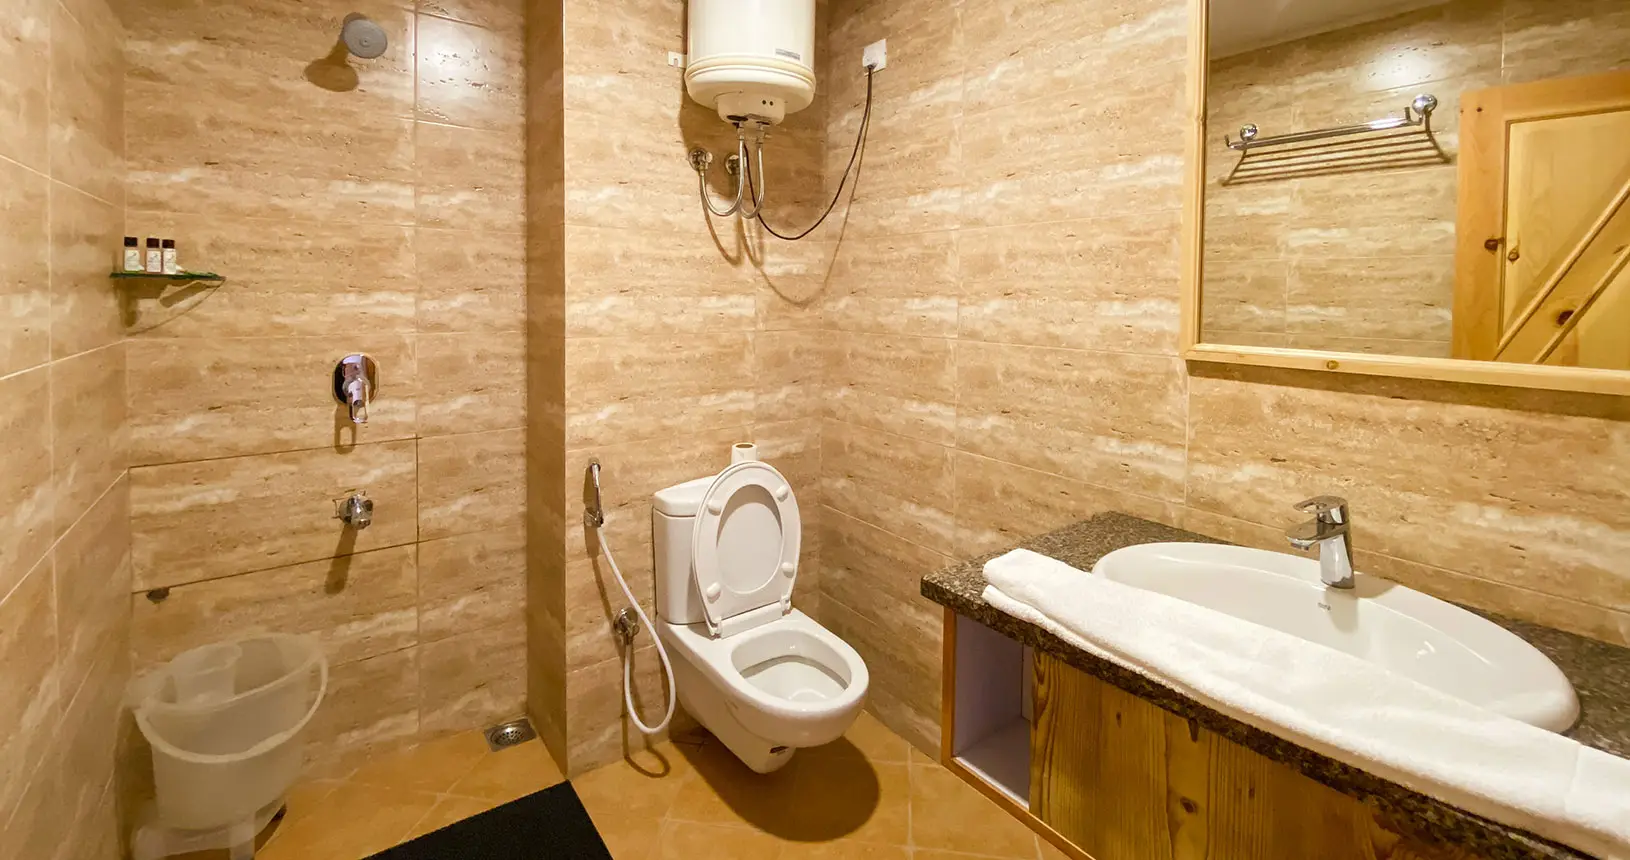 Washroom in the deluxe room at Hotel Batseri, Sangla.